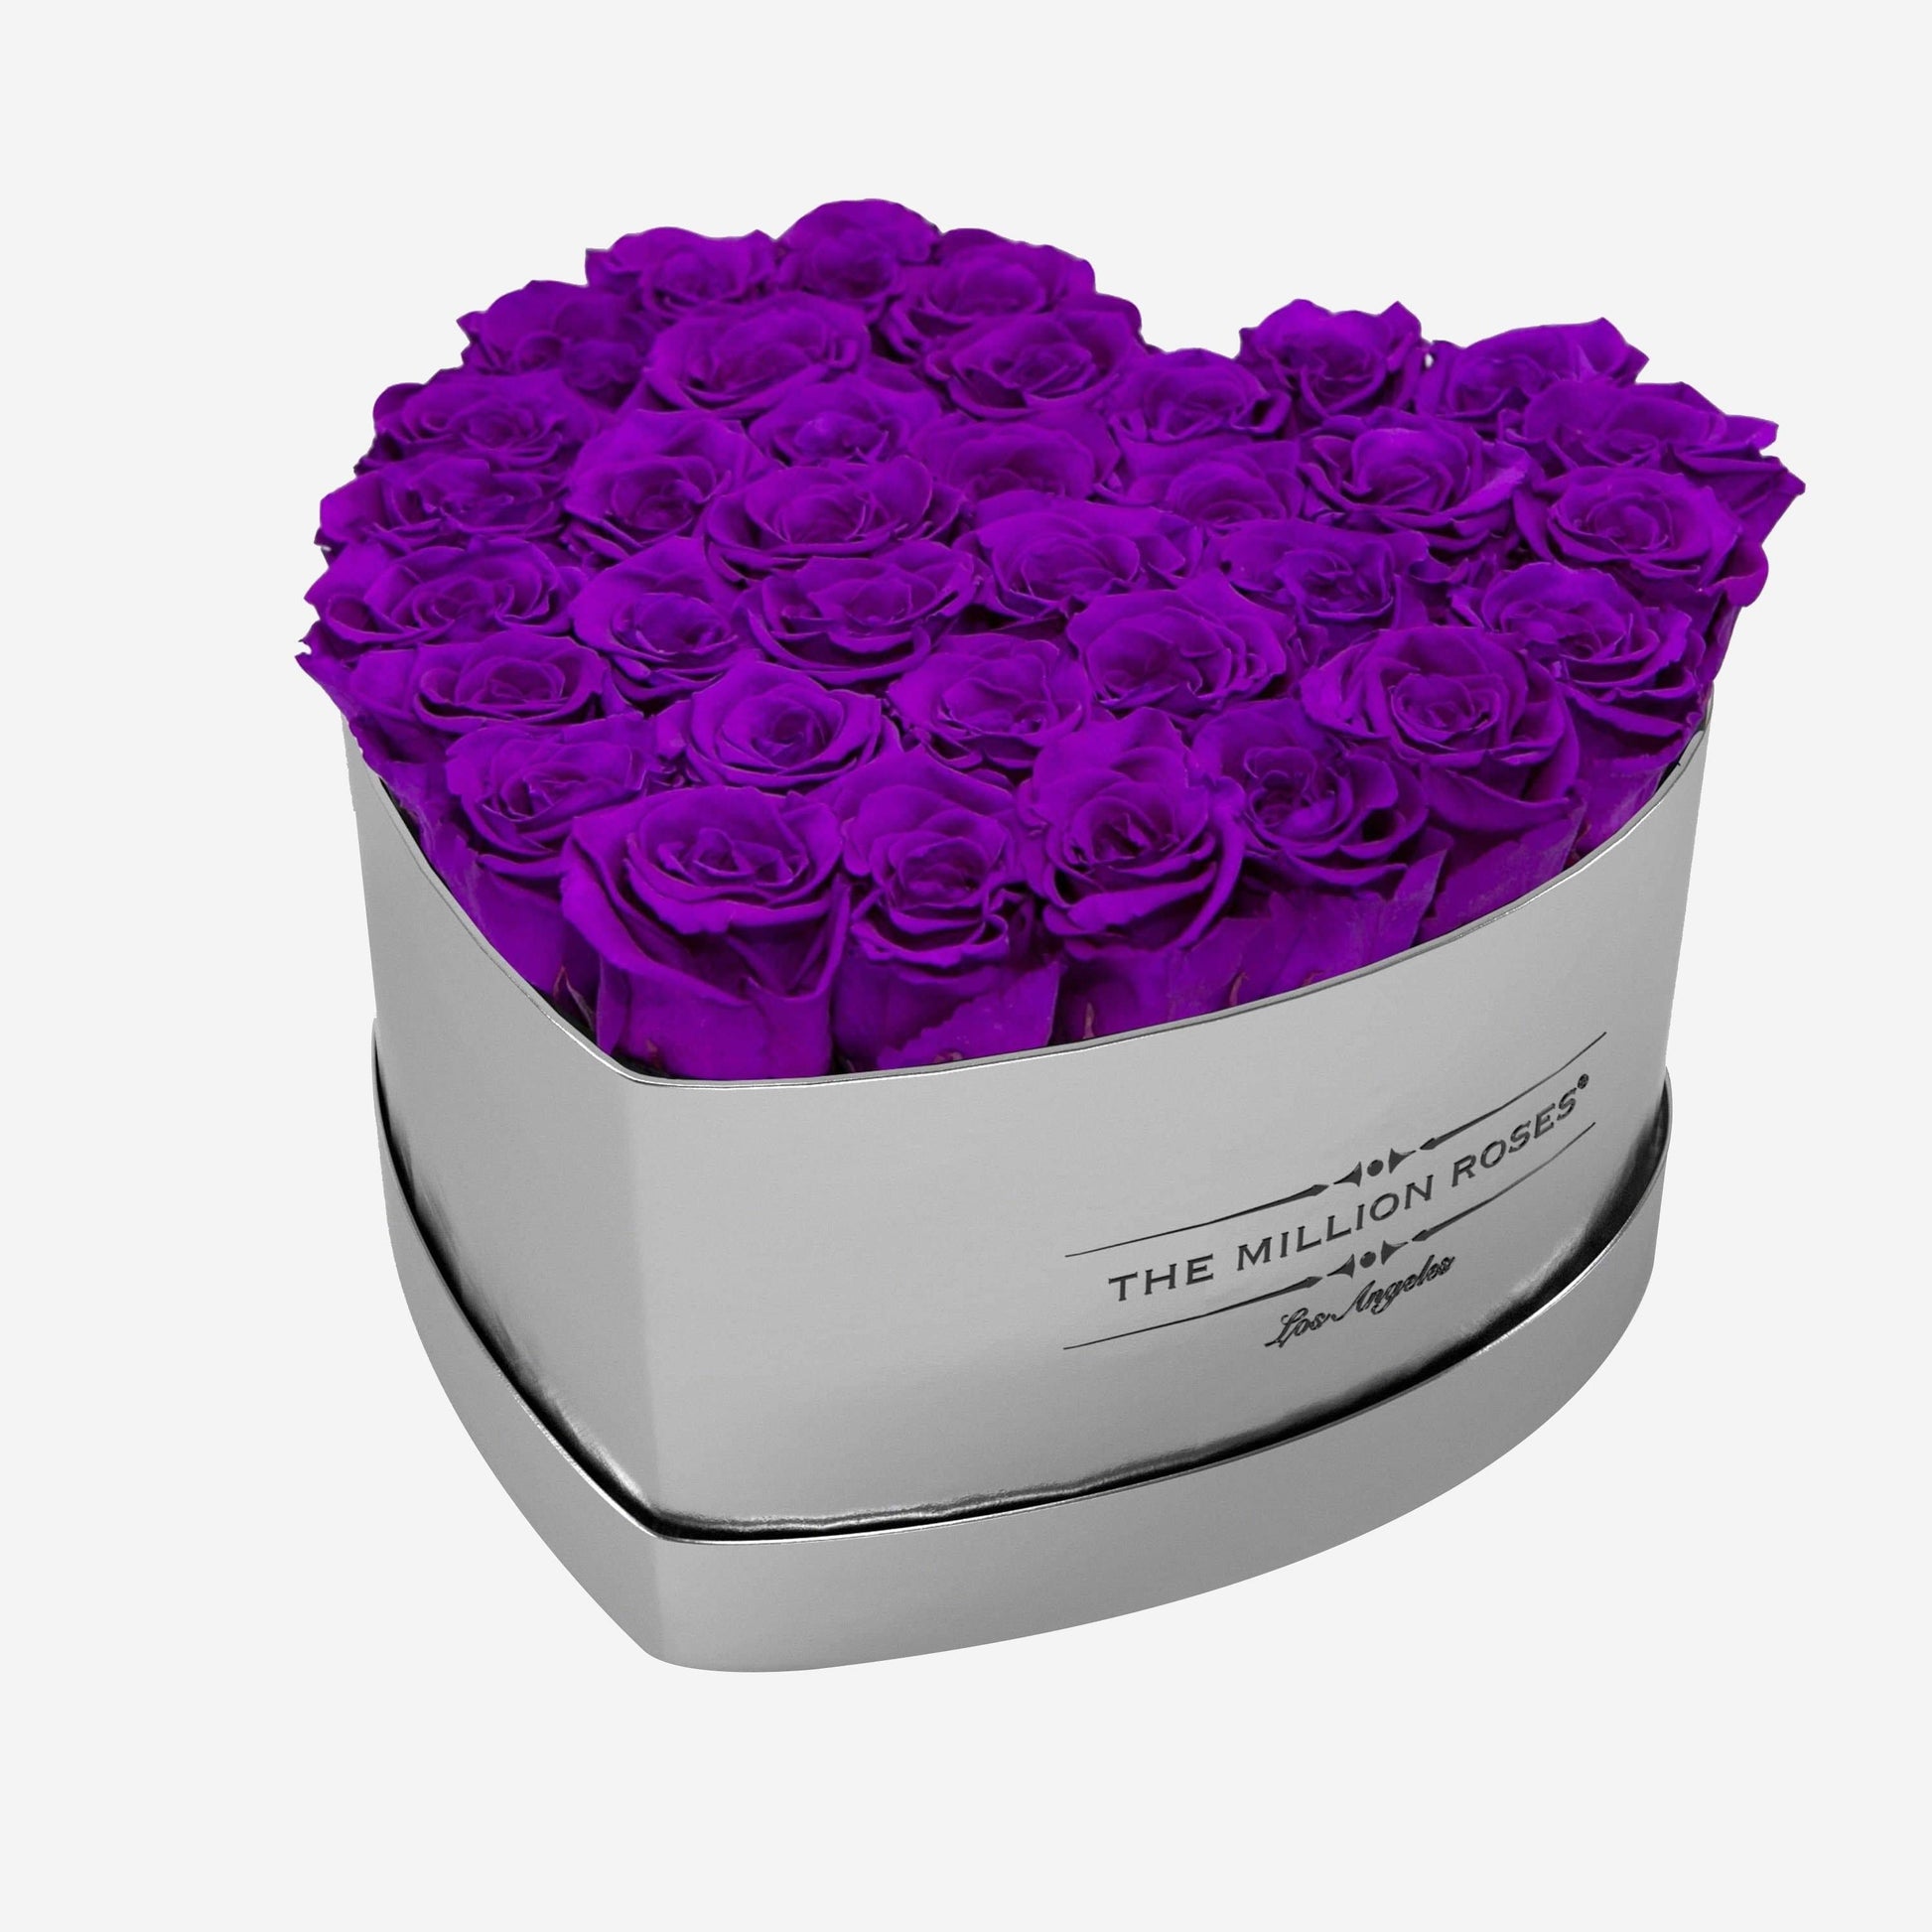 Heart Mirror Silver Box | Bright Purple Roses - The Million Roses